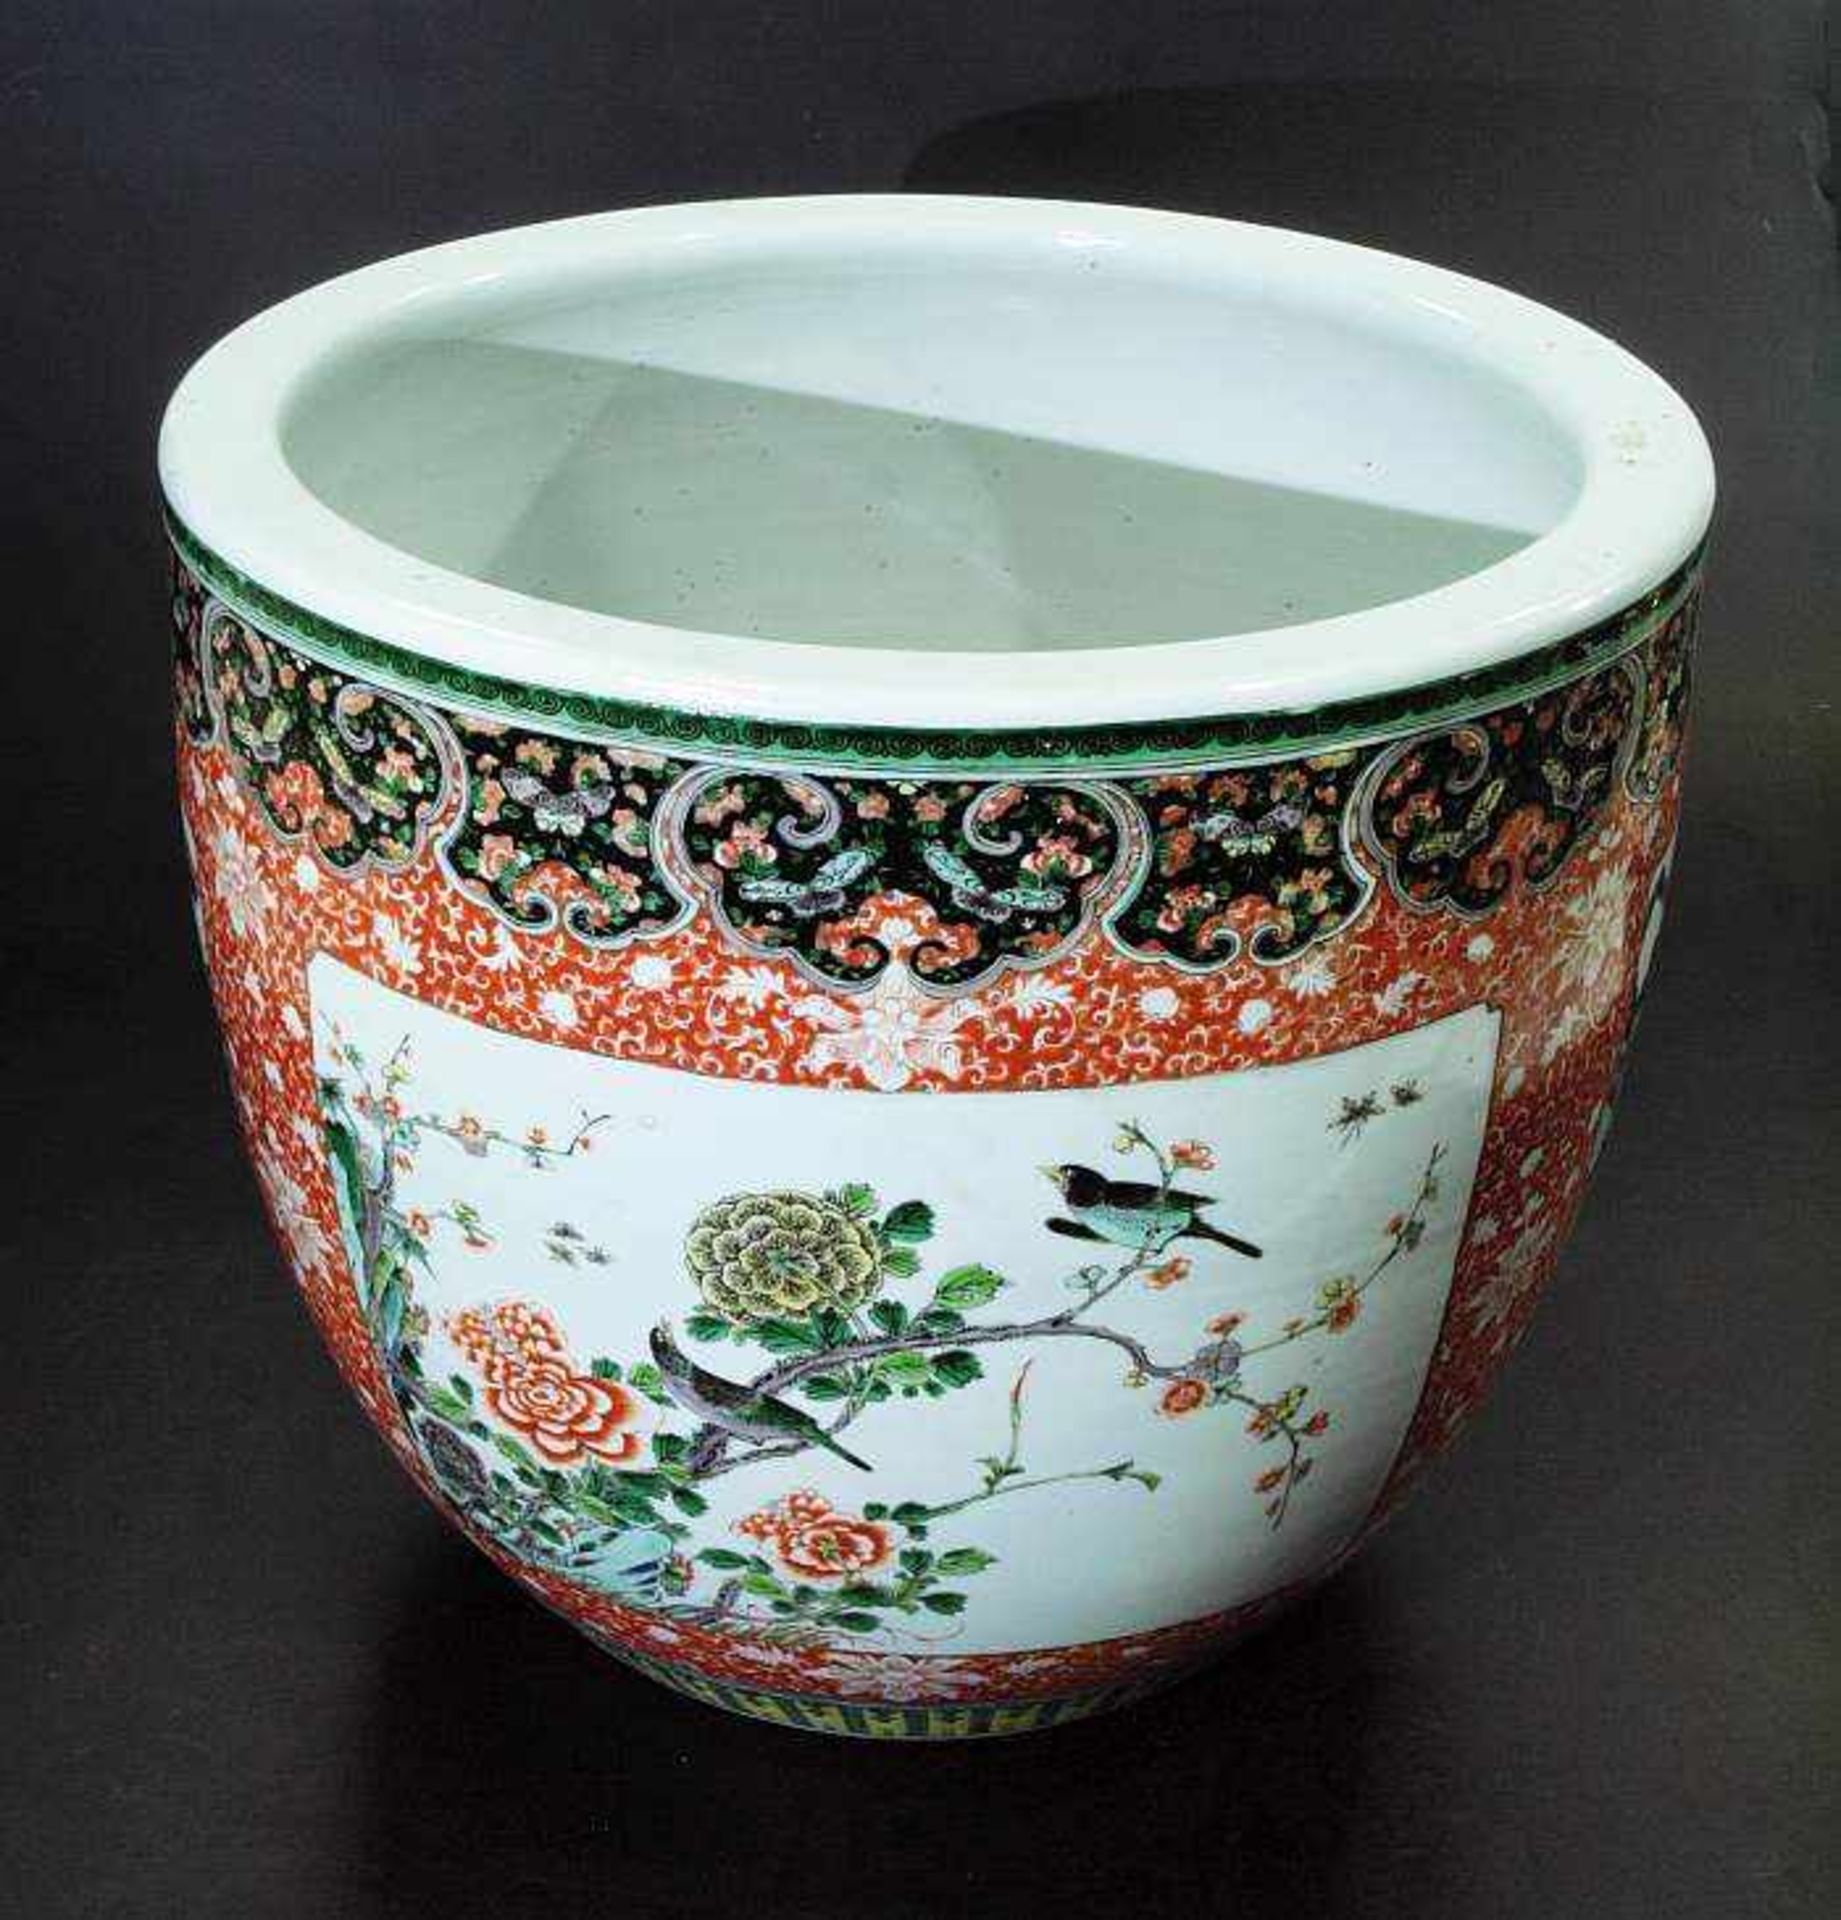 Fischbowl . Fischbowl. Asien 20. Jahrhundert. Porzellantopf, runder Stand, bauchige Form, polychrome